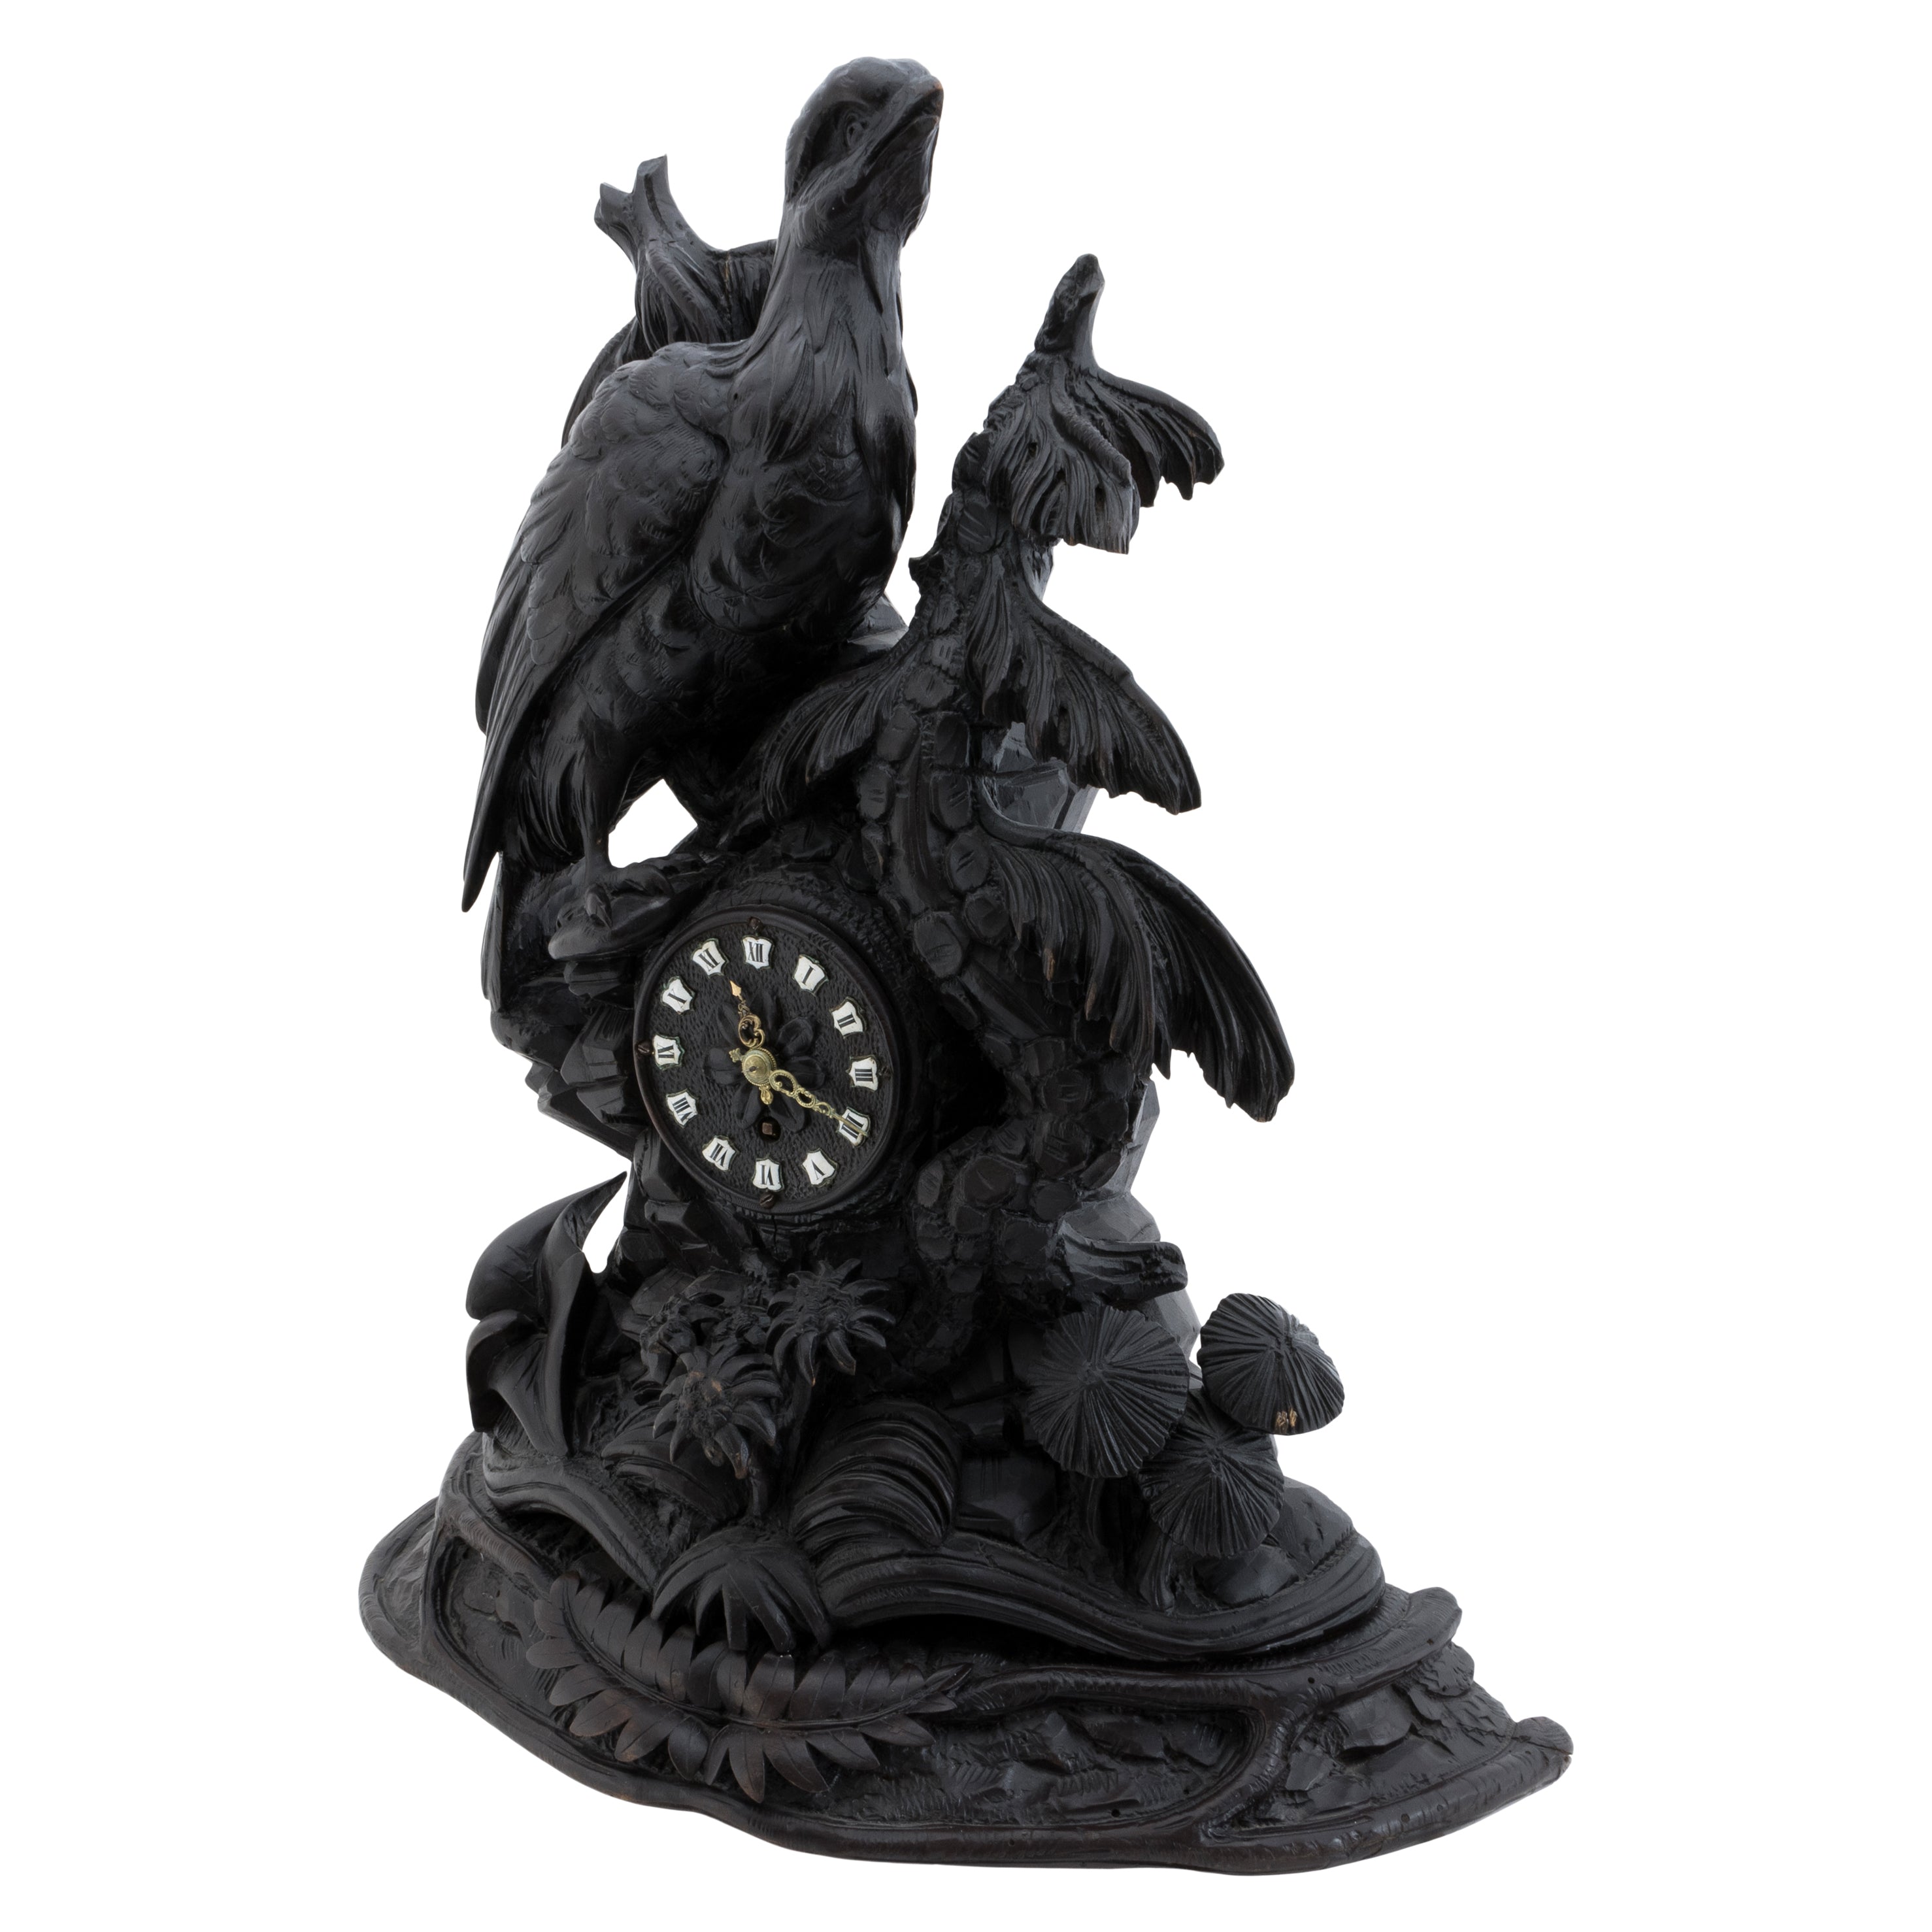 Black Forest Game Clock